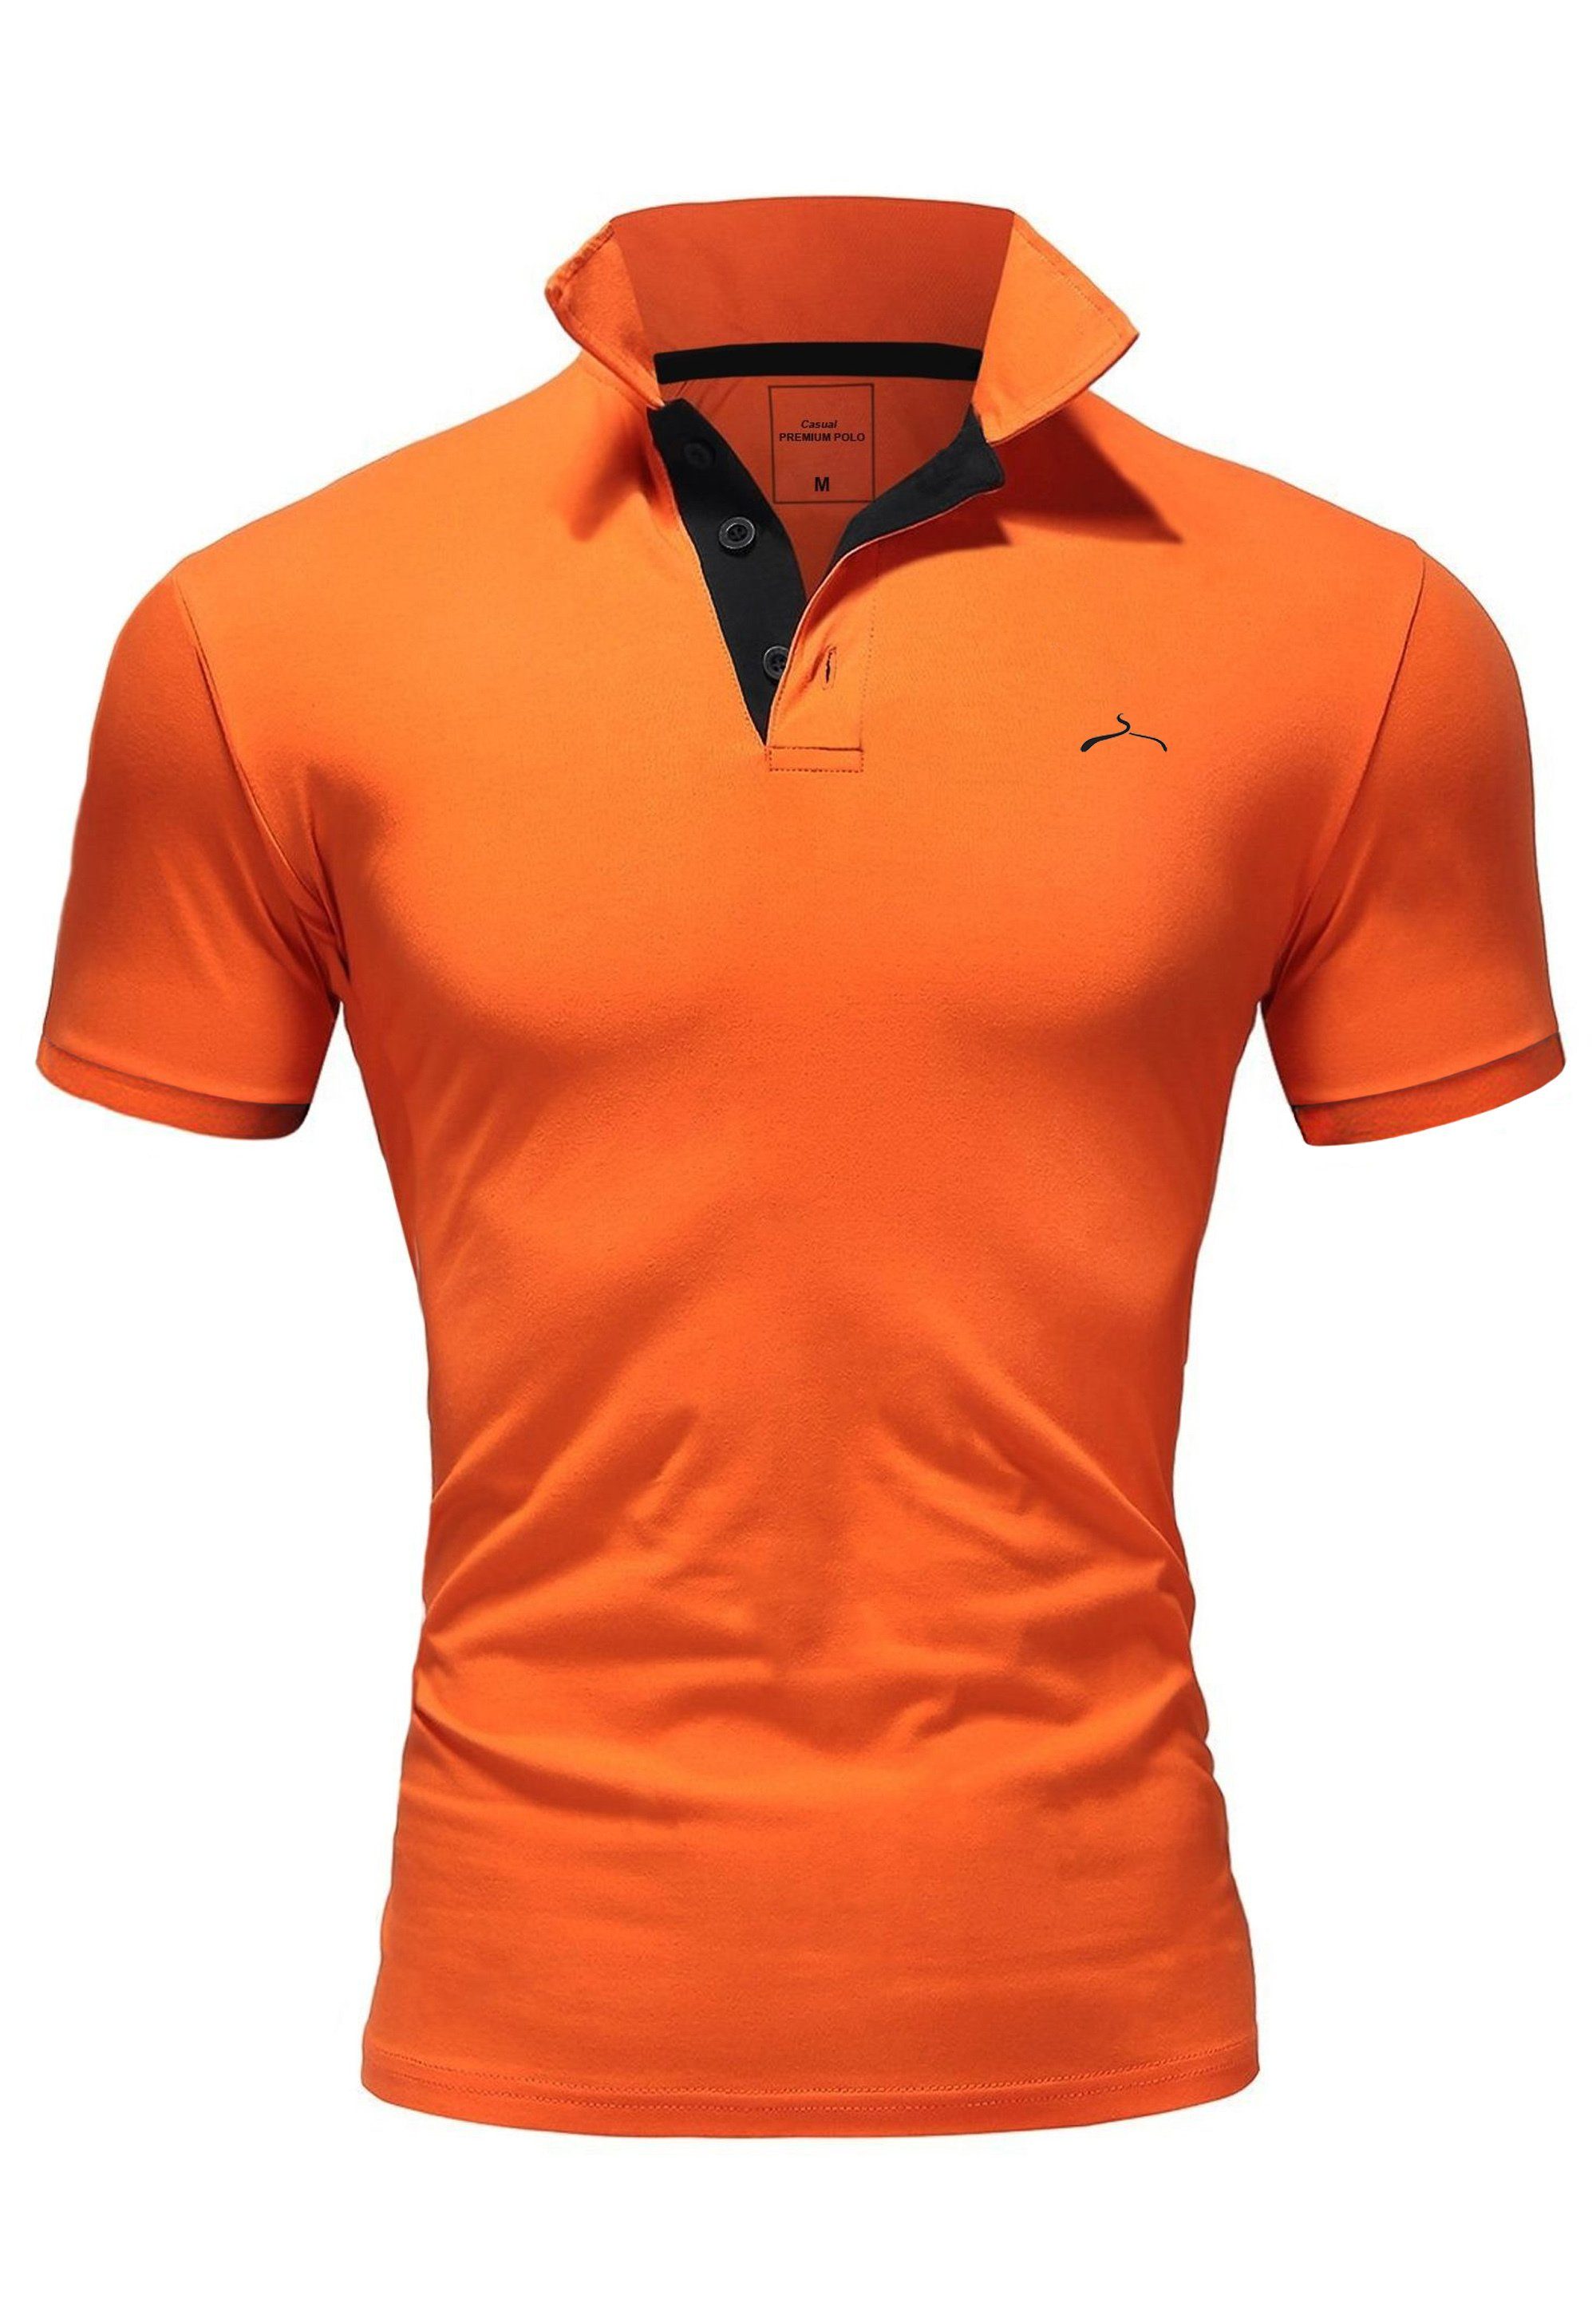 SOULSTAR Poloshirt MPPREMIUM Orange-Schwarz